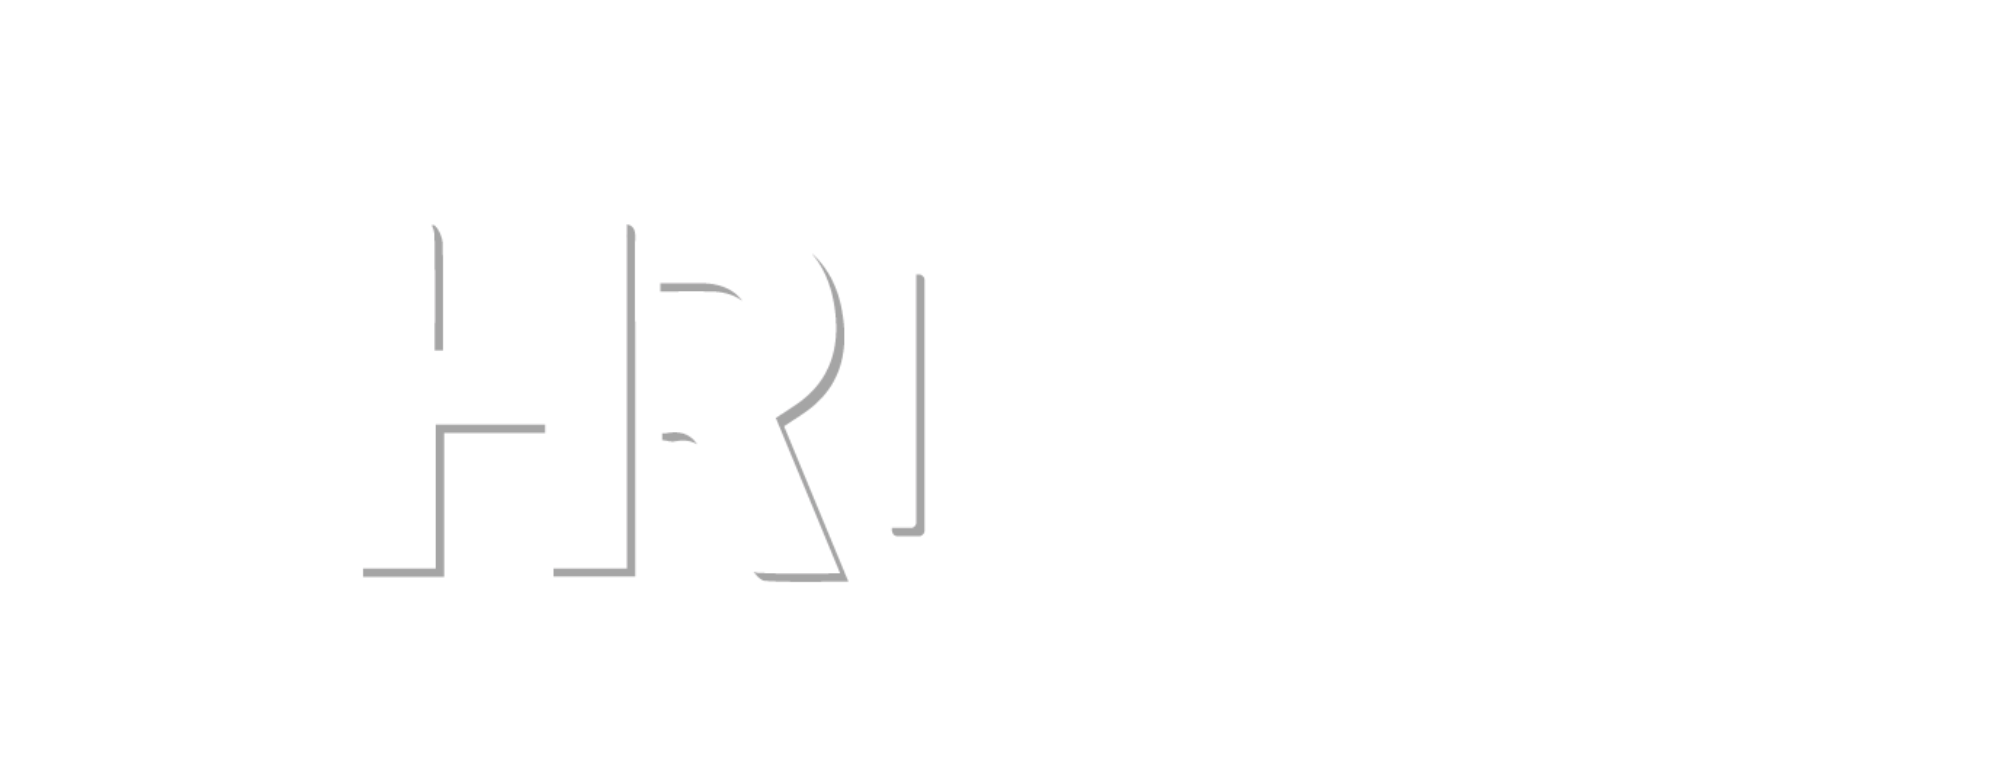 Pharma Solutions HR, C.A.